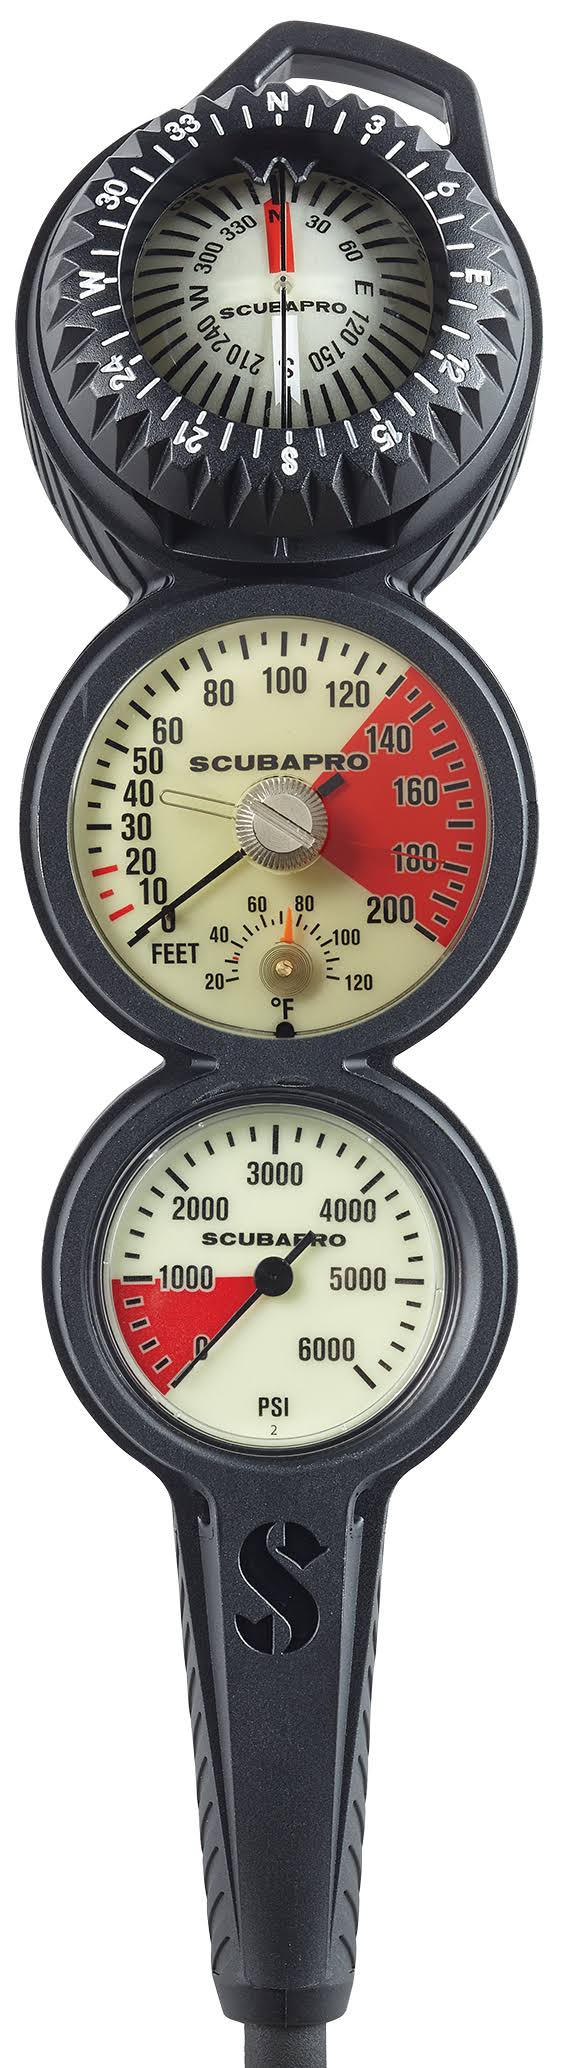 Scubapro Inline Gauge - with FS2 Compass